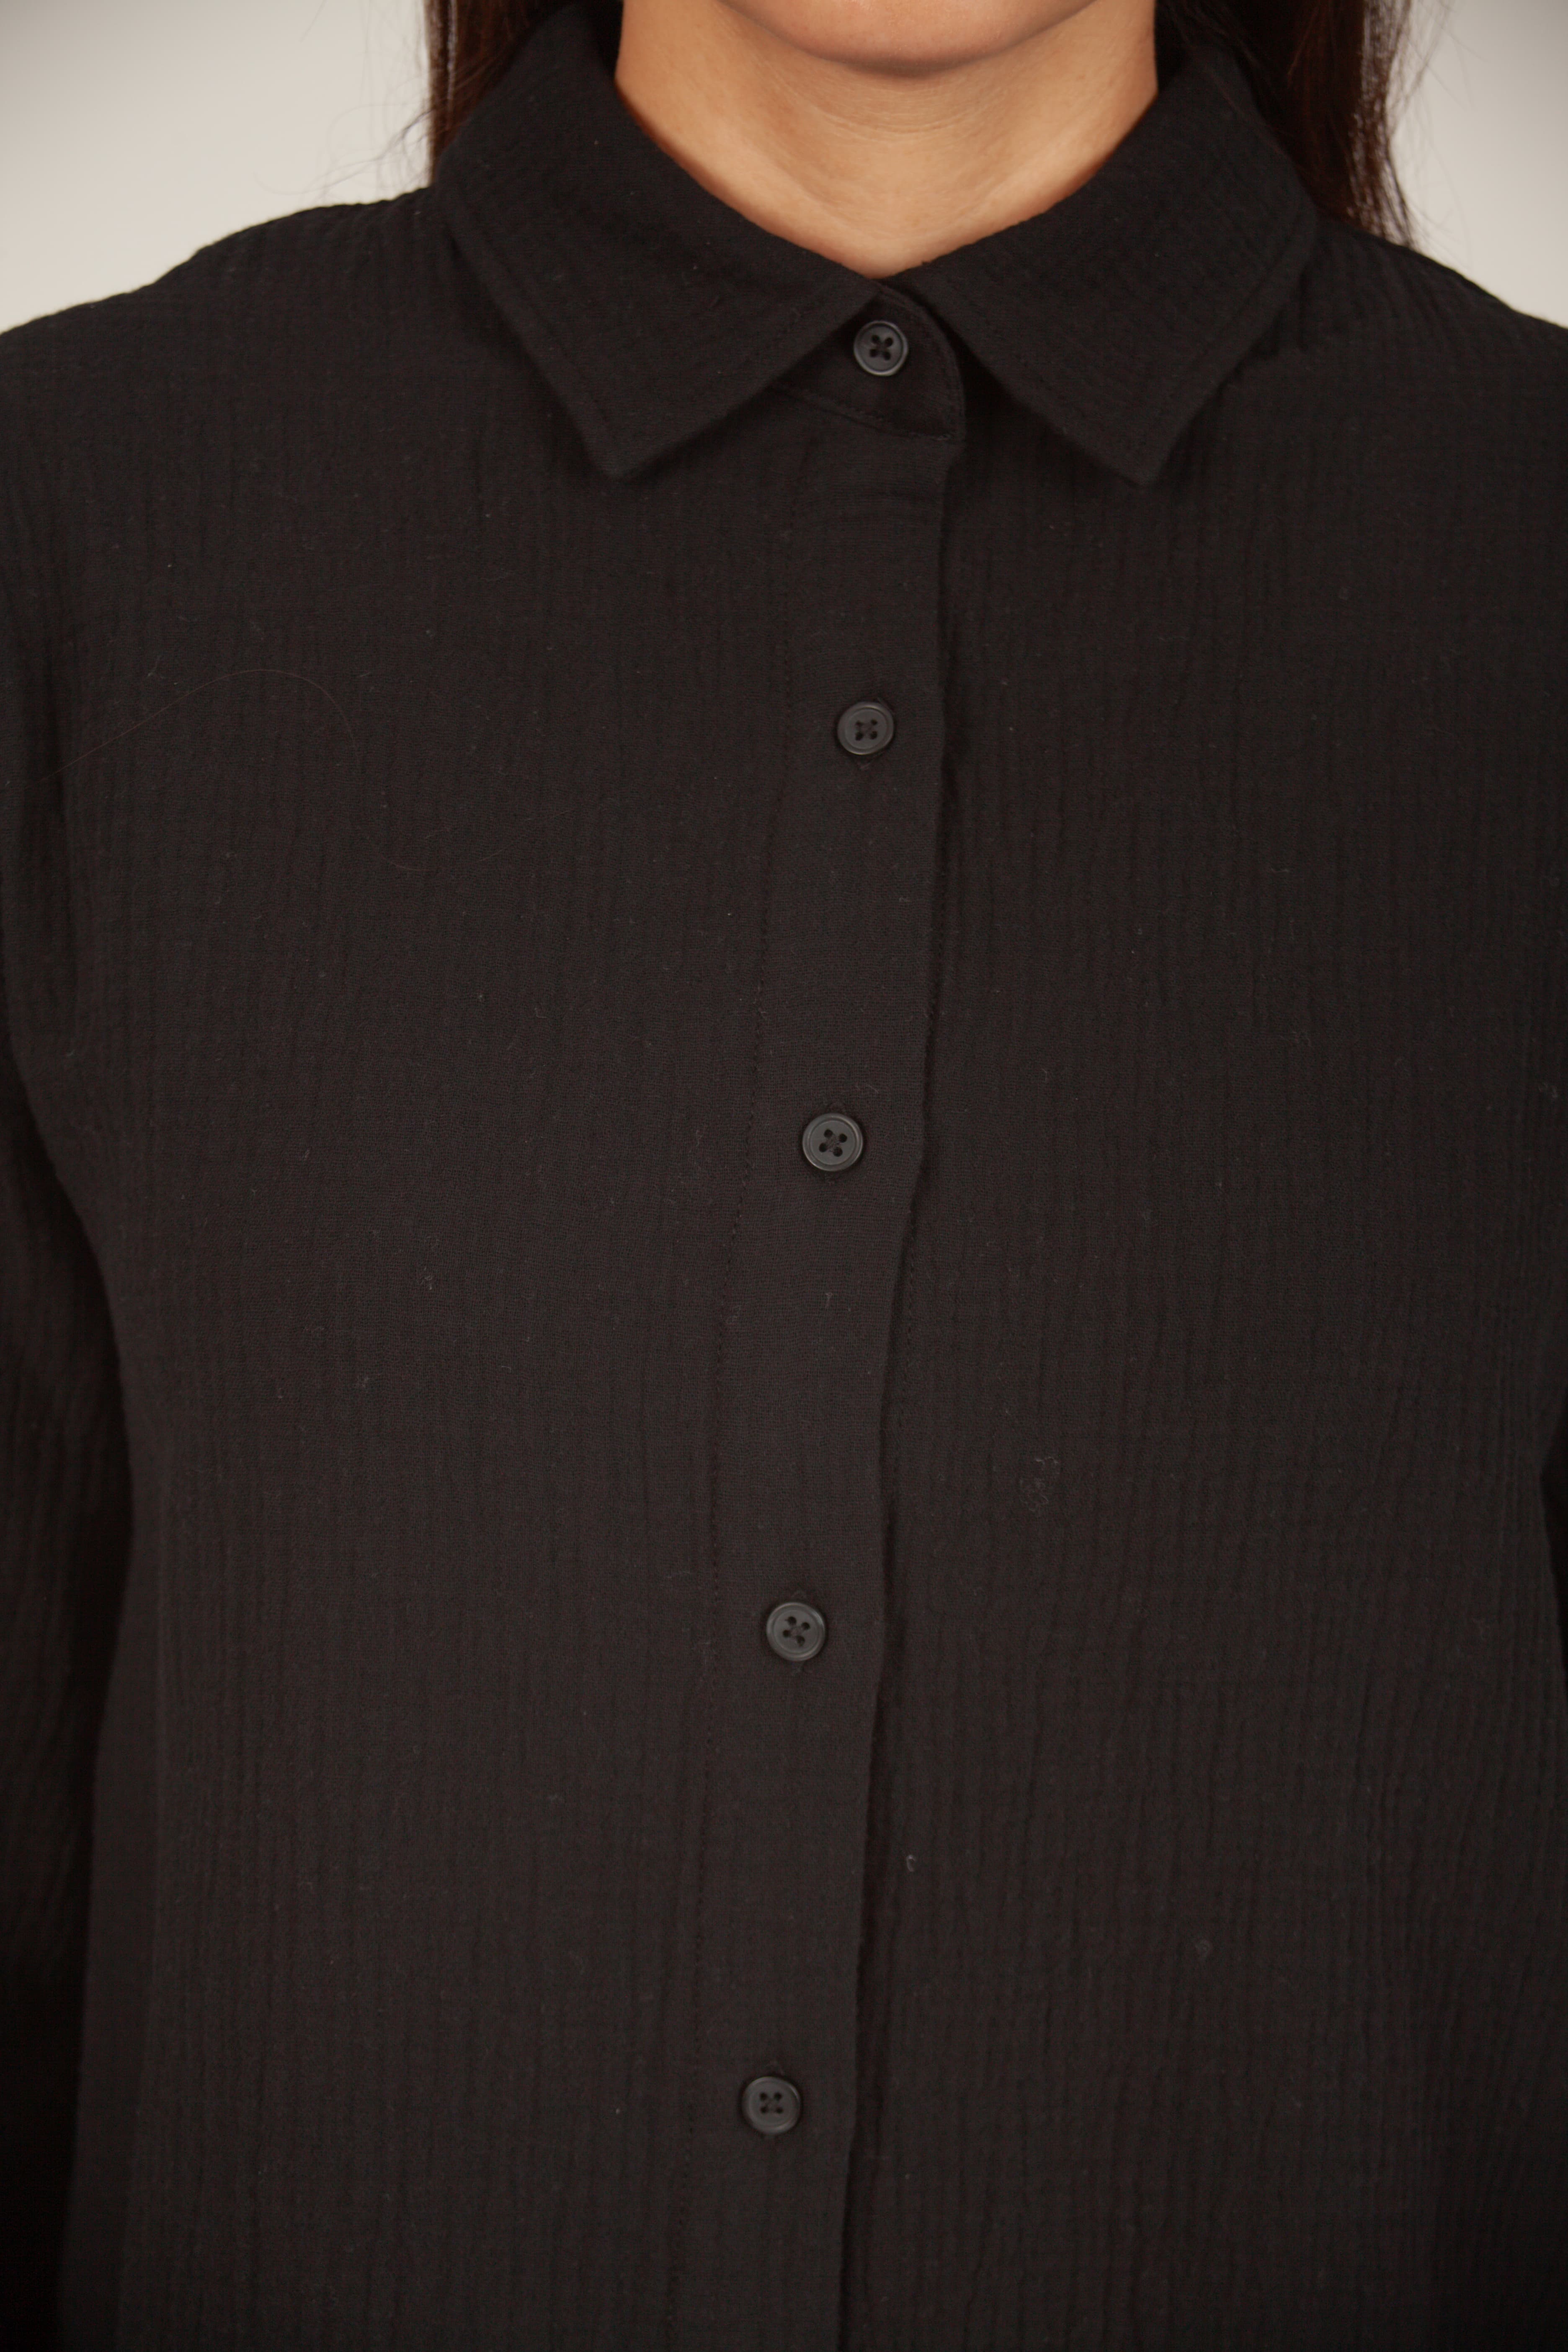 Lightweight cotton gauze button down shirt in black